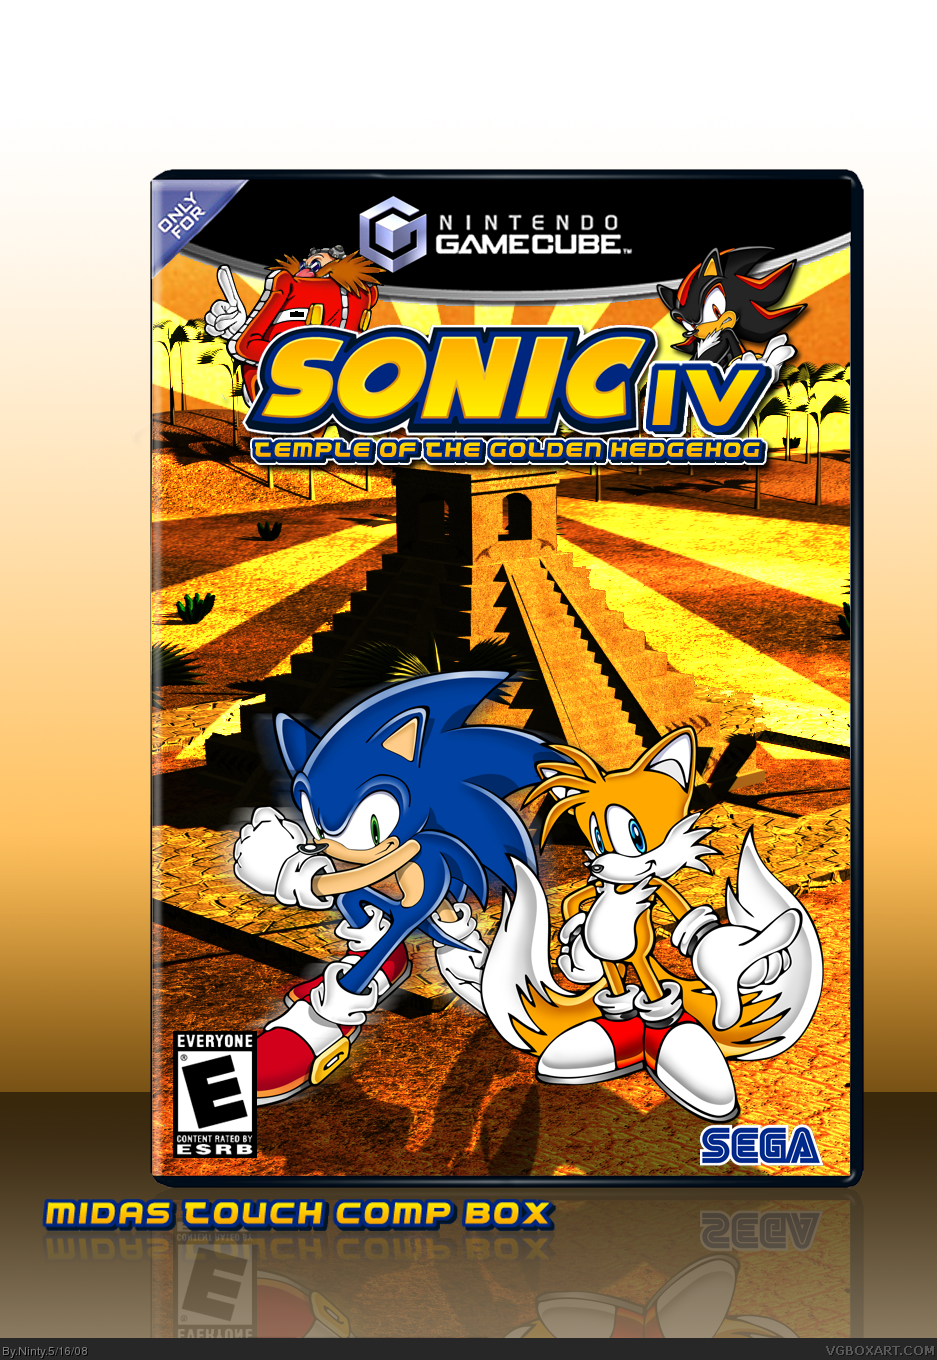 Sonic the Hedgehog IV box cover